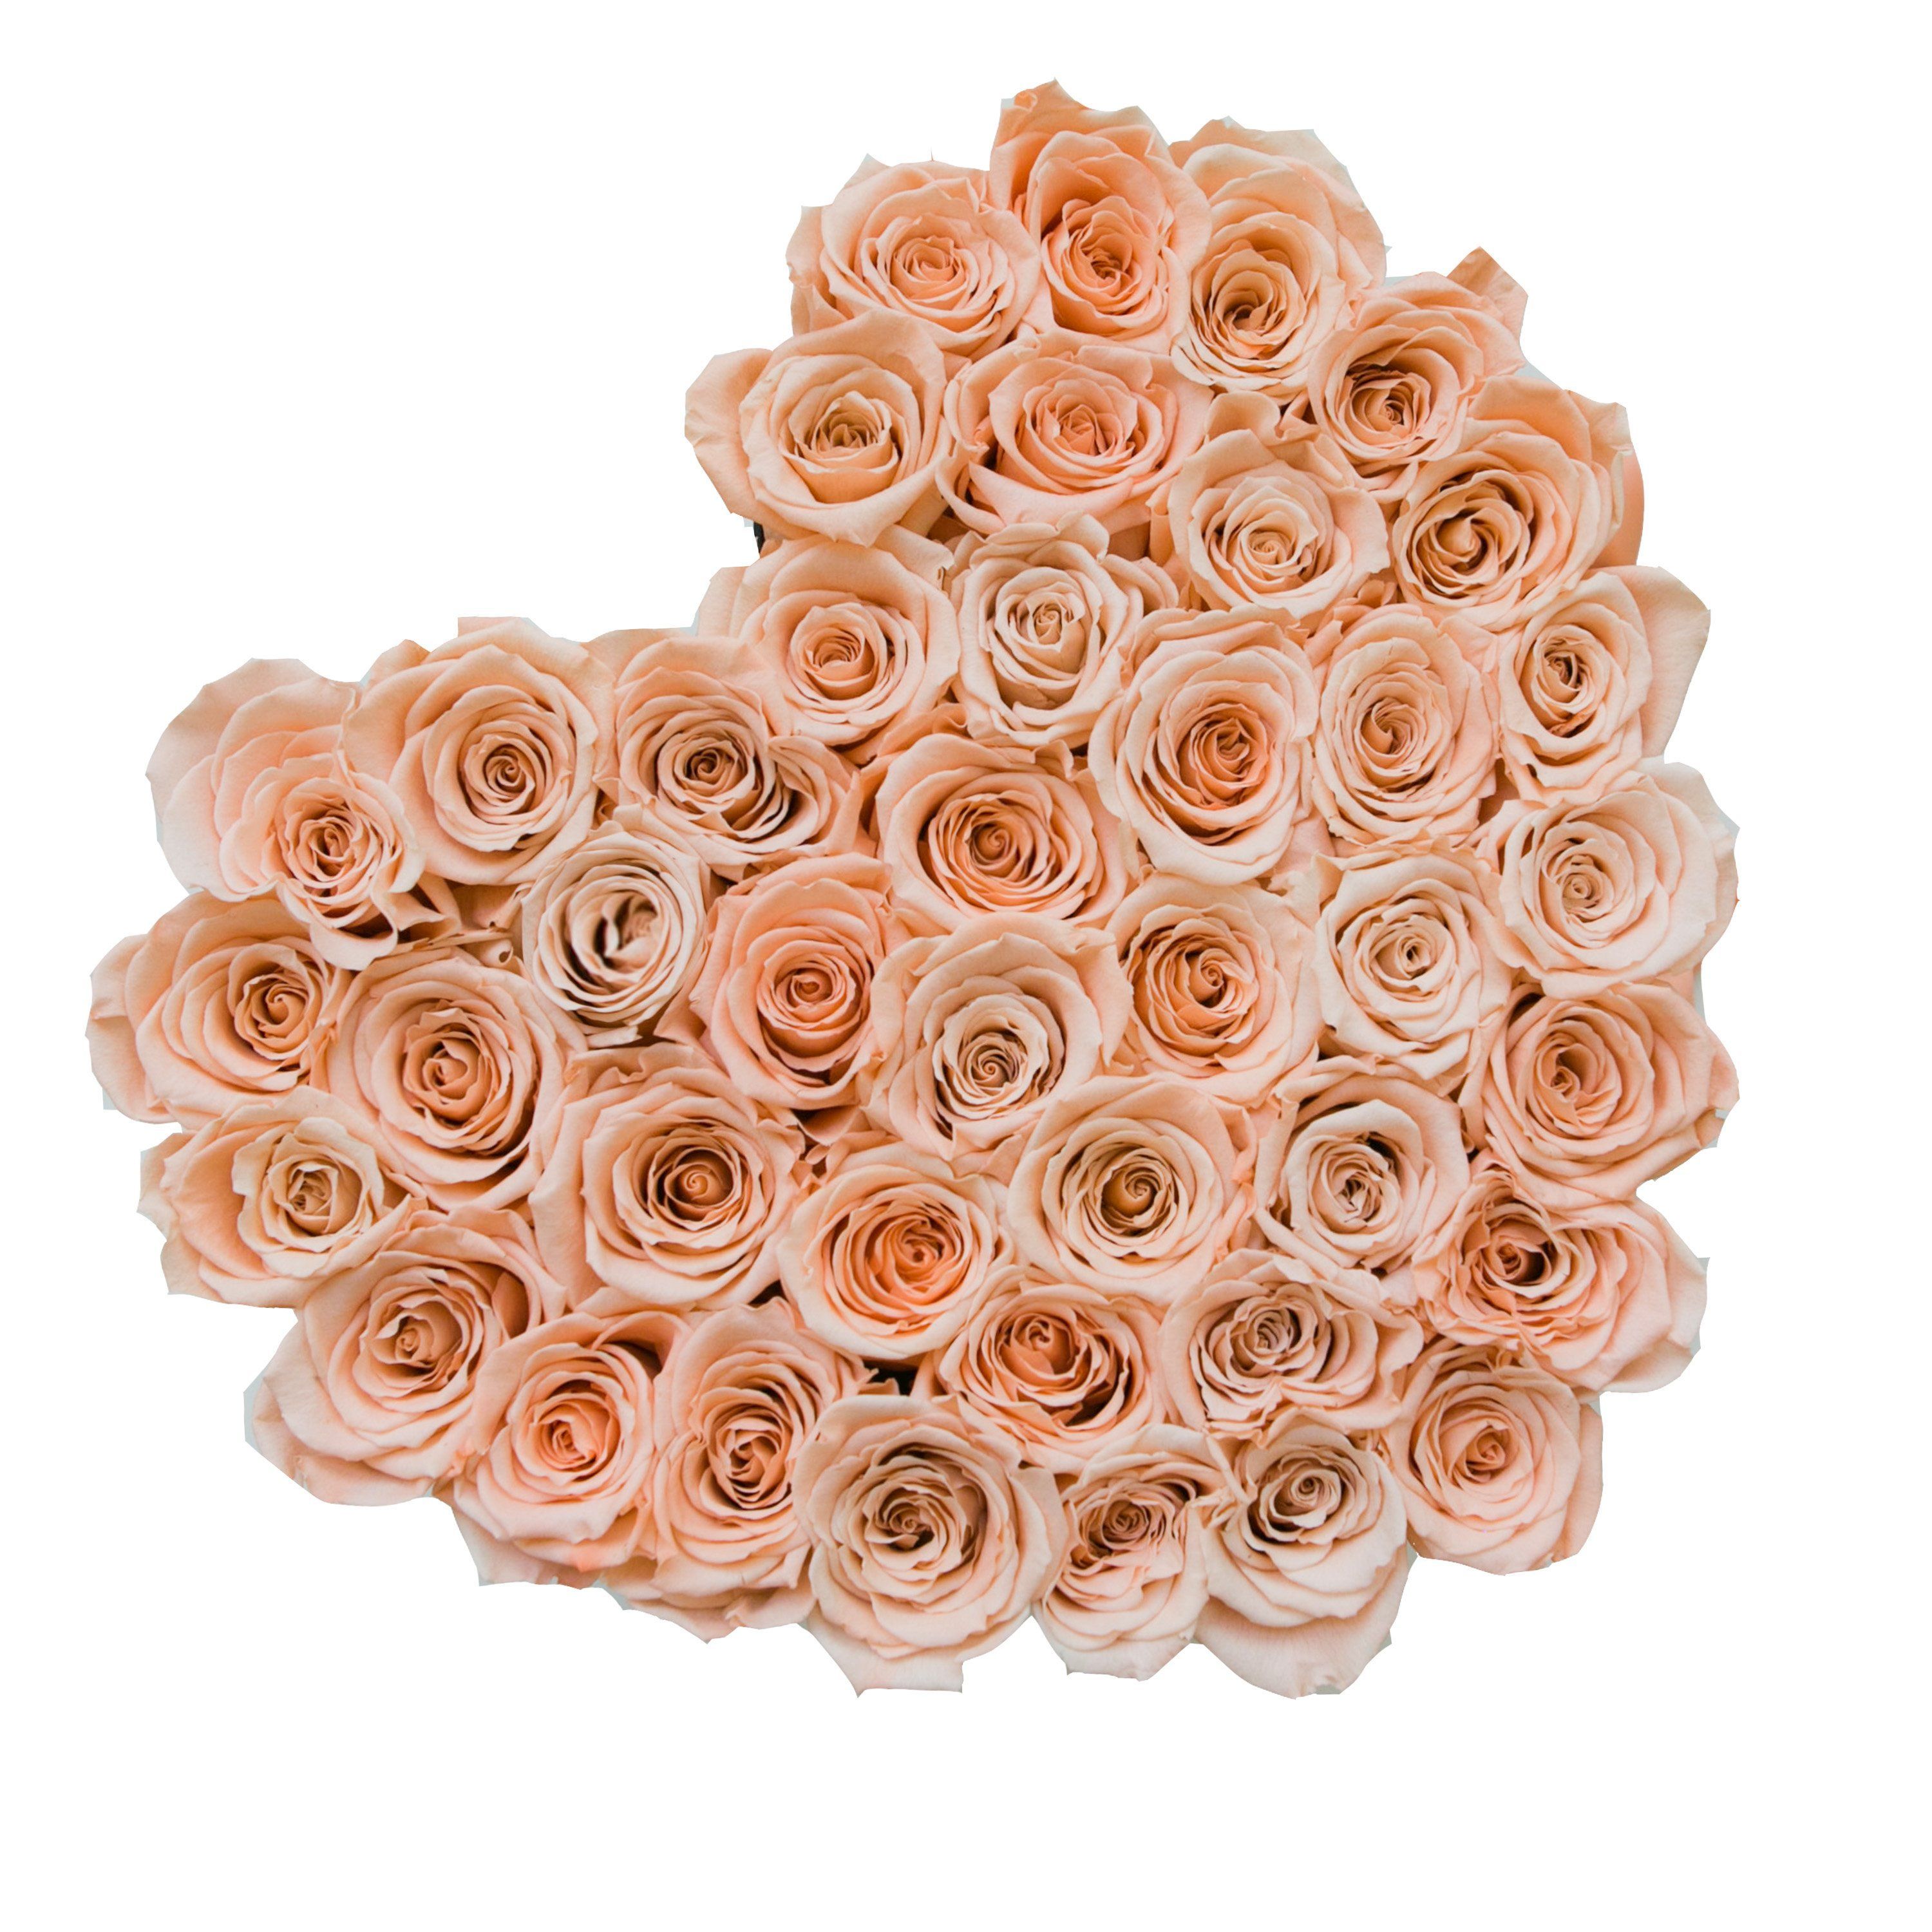 LOVE box - white - peach roses peach eternity roses - the million roses